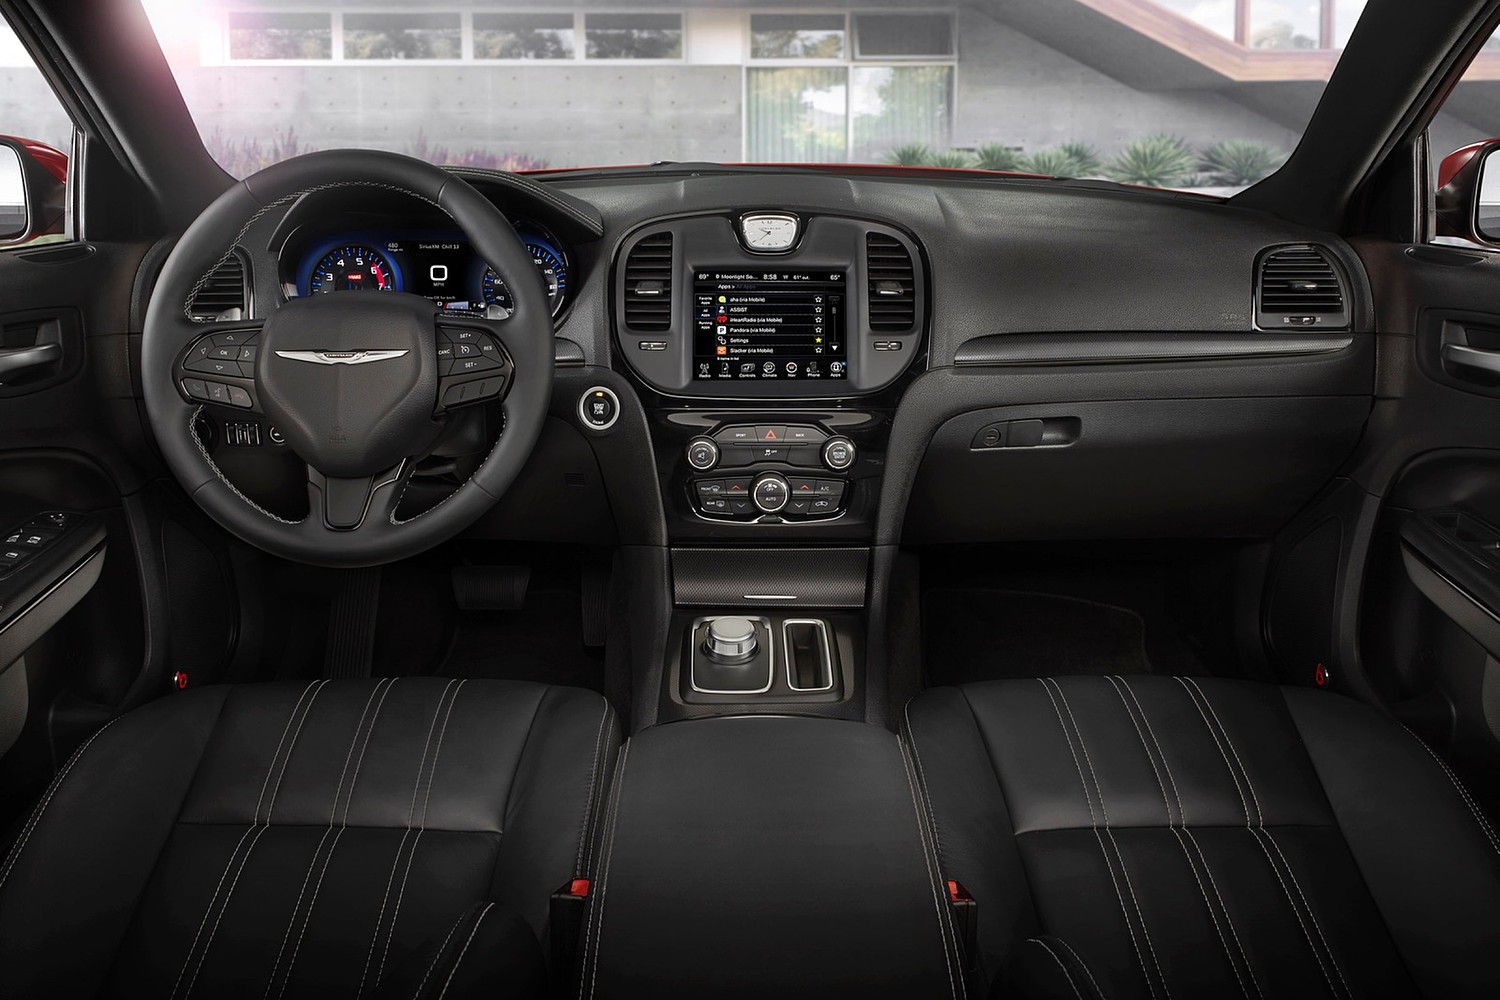 Chrysler 300 S Sedan Dashboard (2016 model year shown)